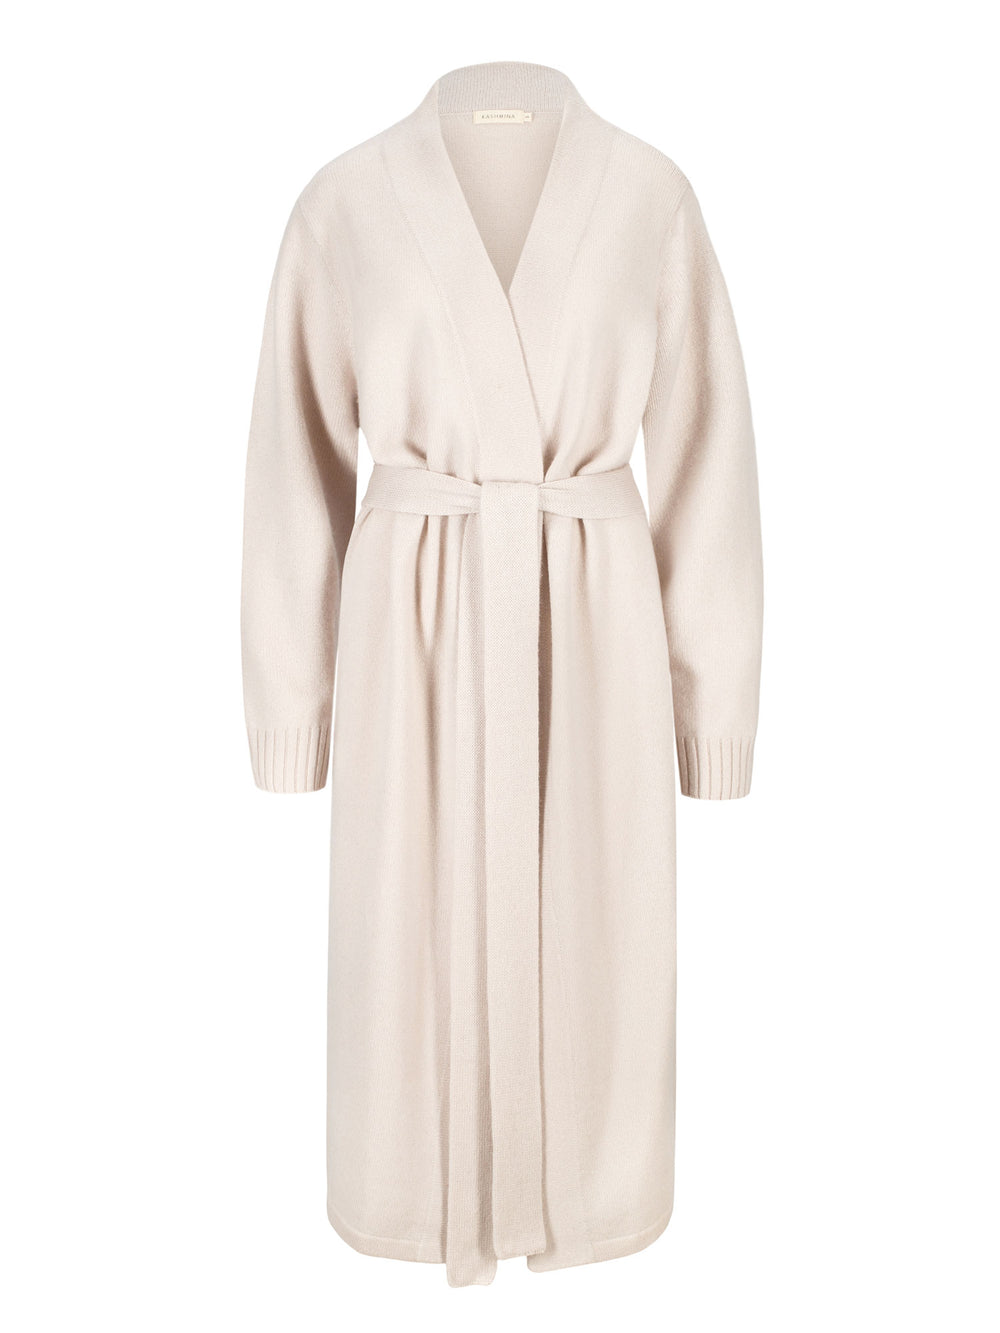 morning robe 100% Kashmir from Kashmina, pearl comfort 